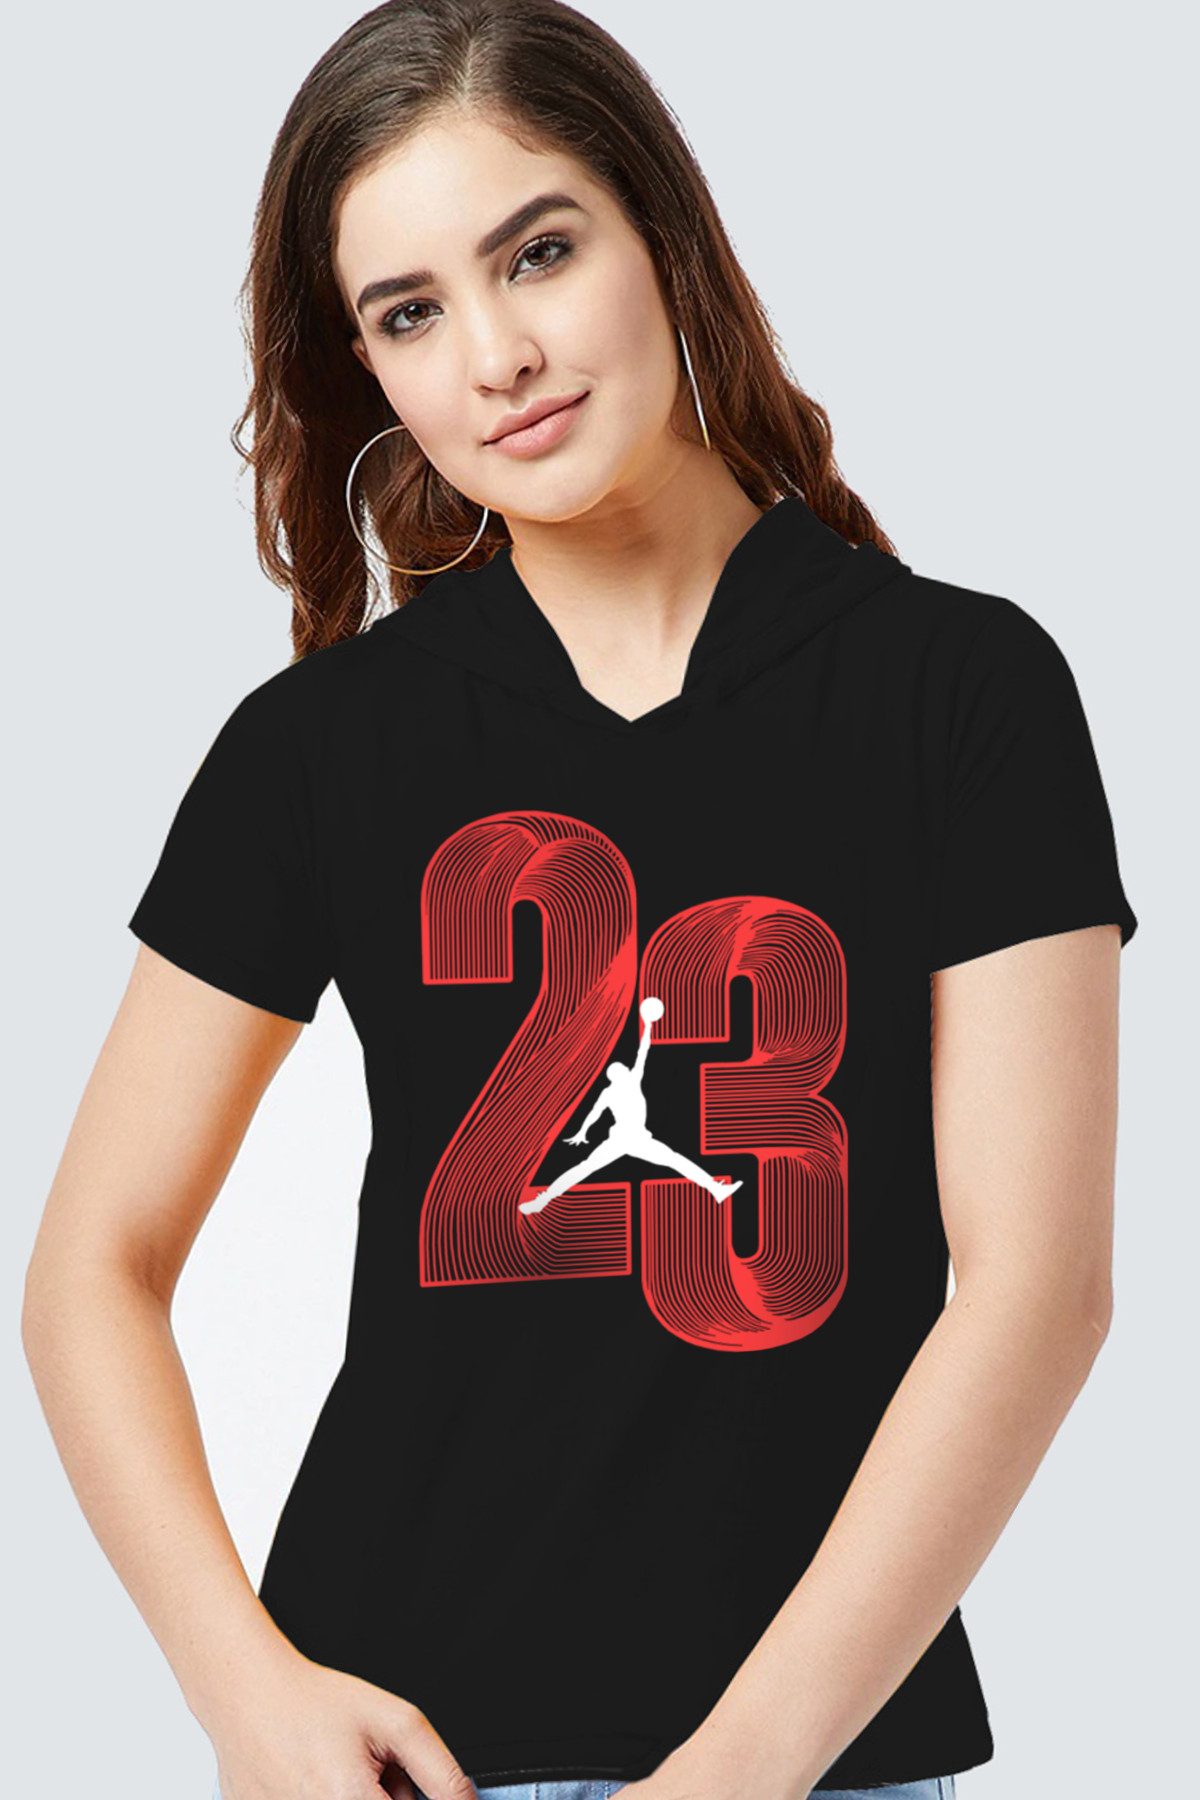 Yirmi Üç Siyah Kapşonlu Kısa Kollu Kadın T-shirt